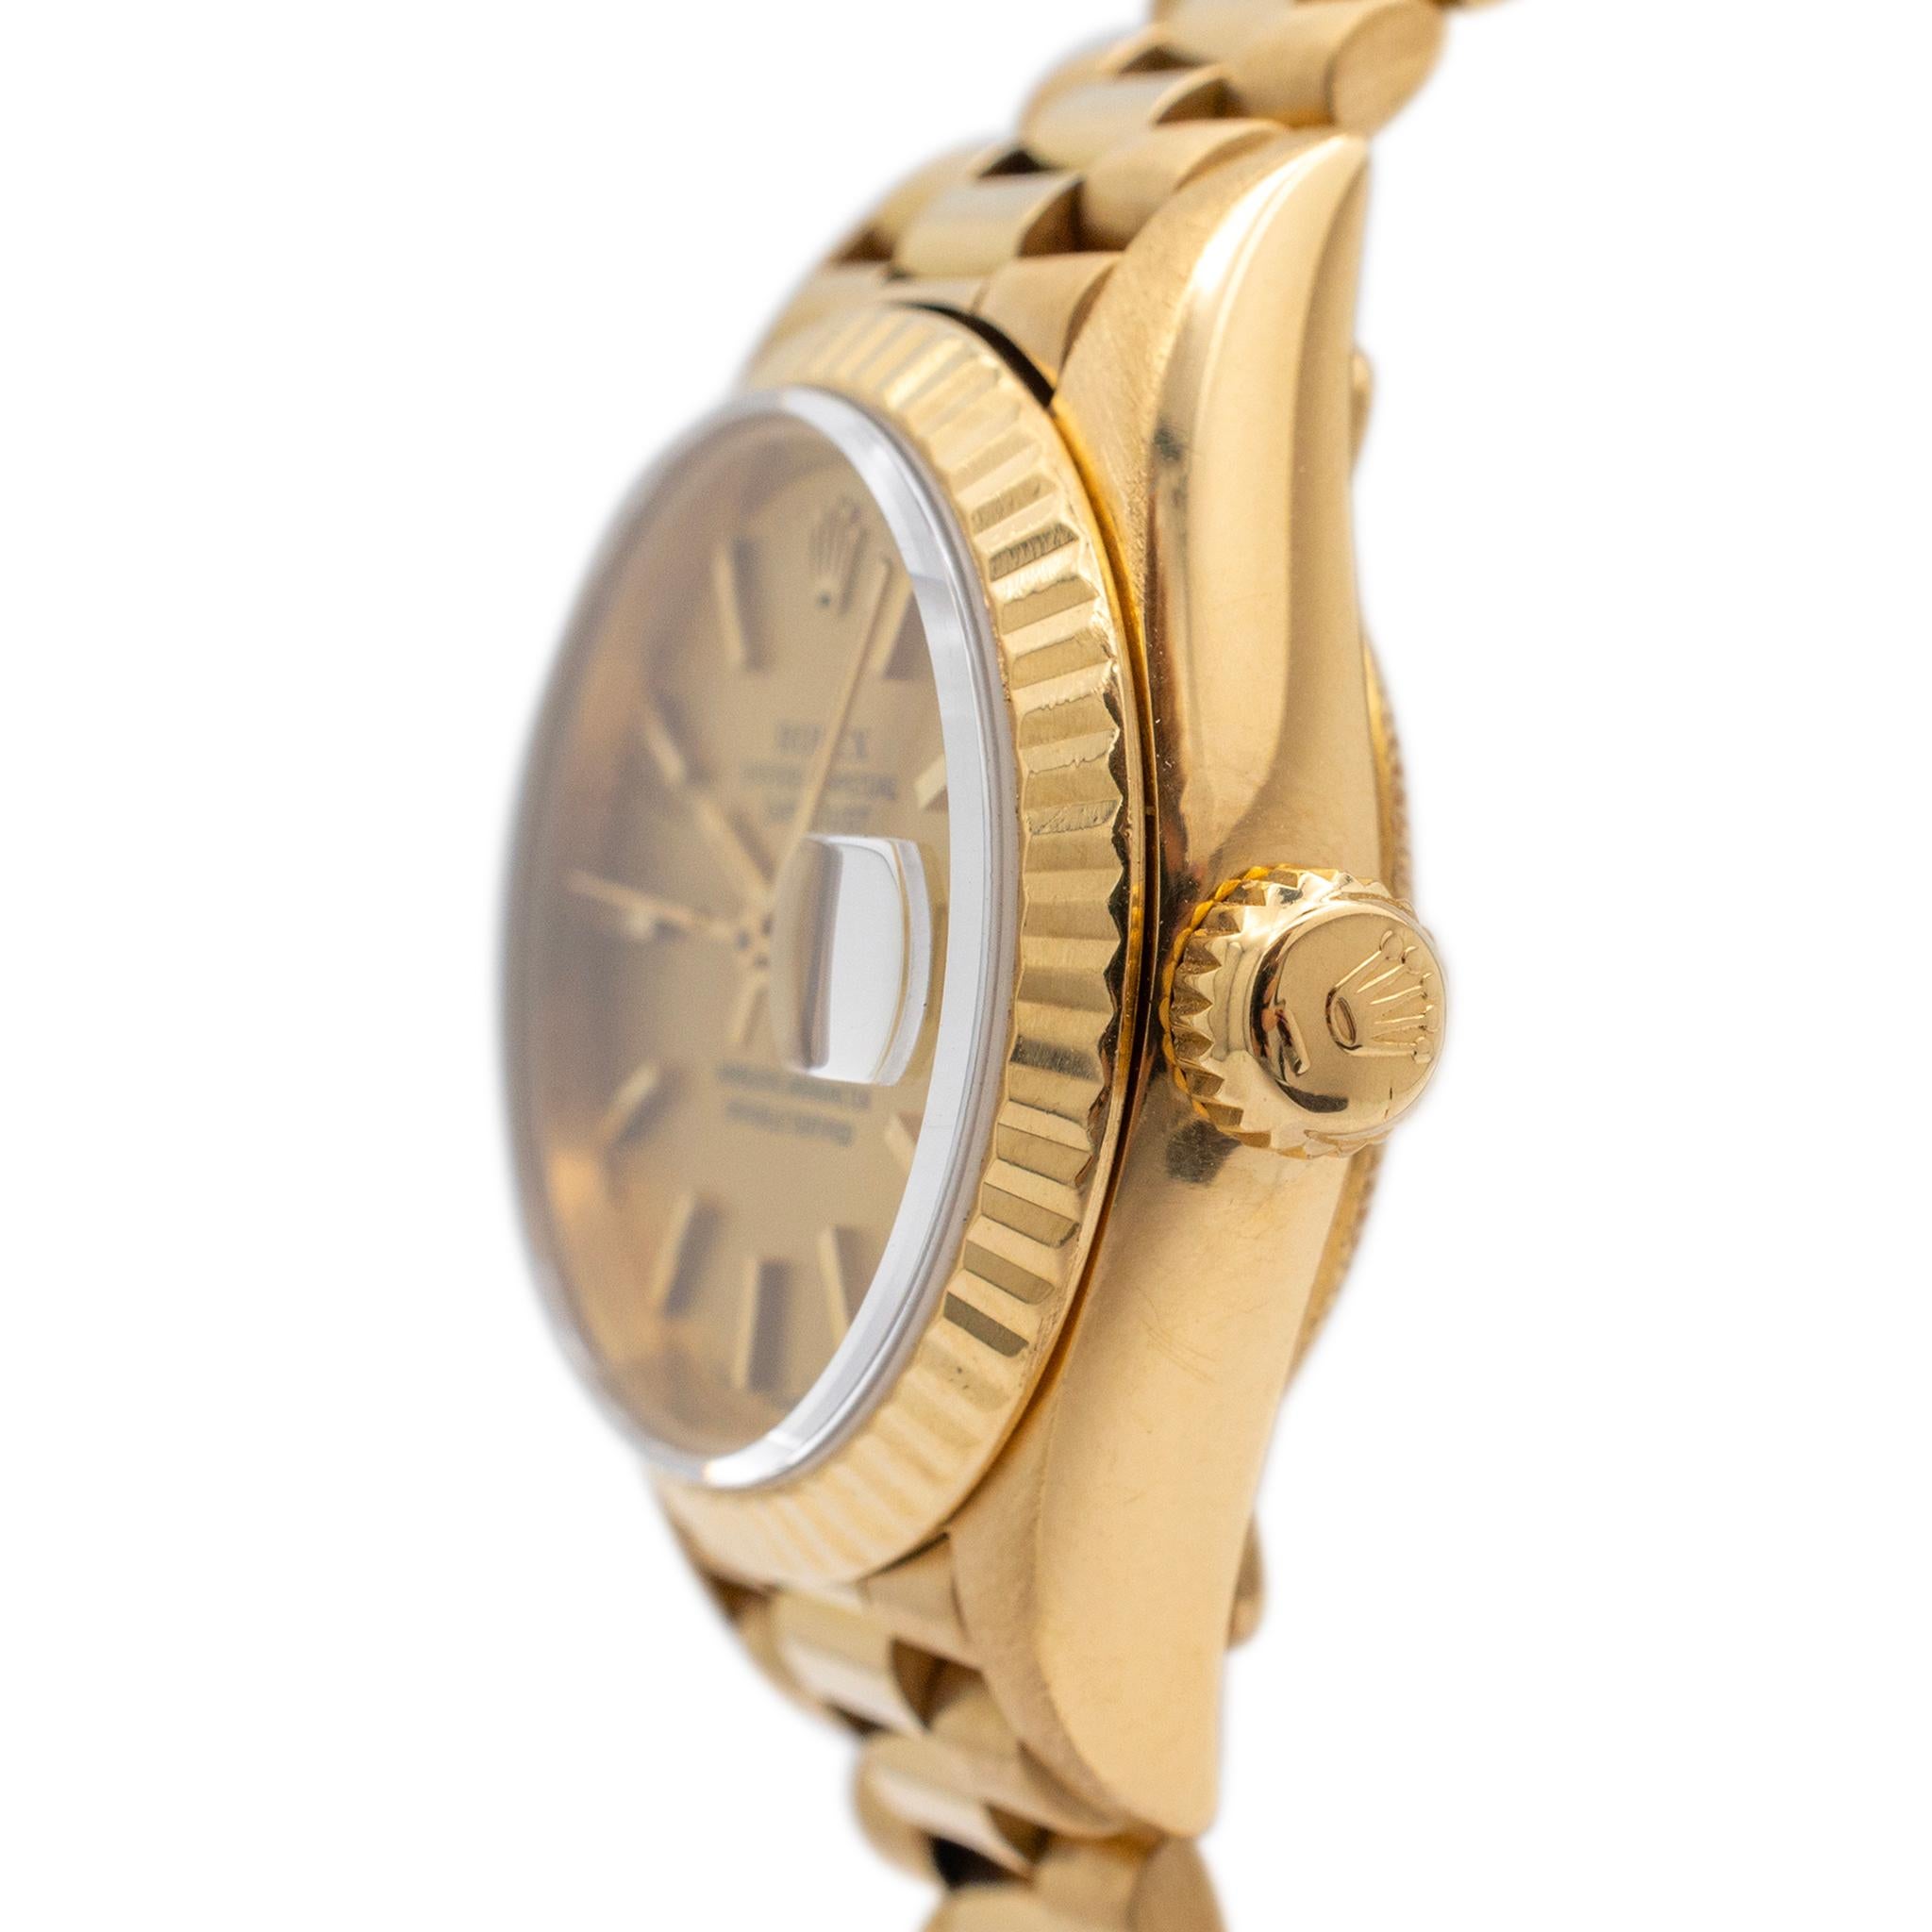 Brand: Rolex

Gender: Ladies

Metal Type: 18K Yellow Gold

Diameter: 26.00 mm

Weight: 72.15 grams

Ladies 18K yellow gold, ROLEX Swiss made watch. The 